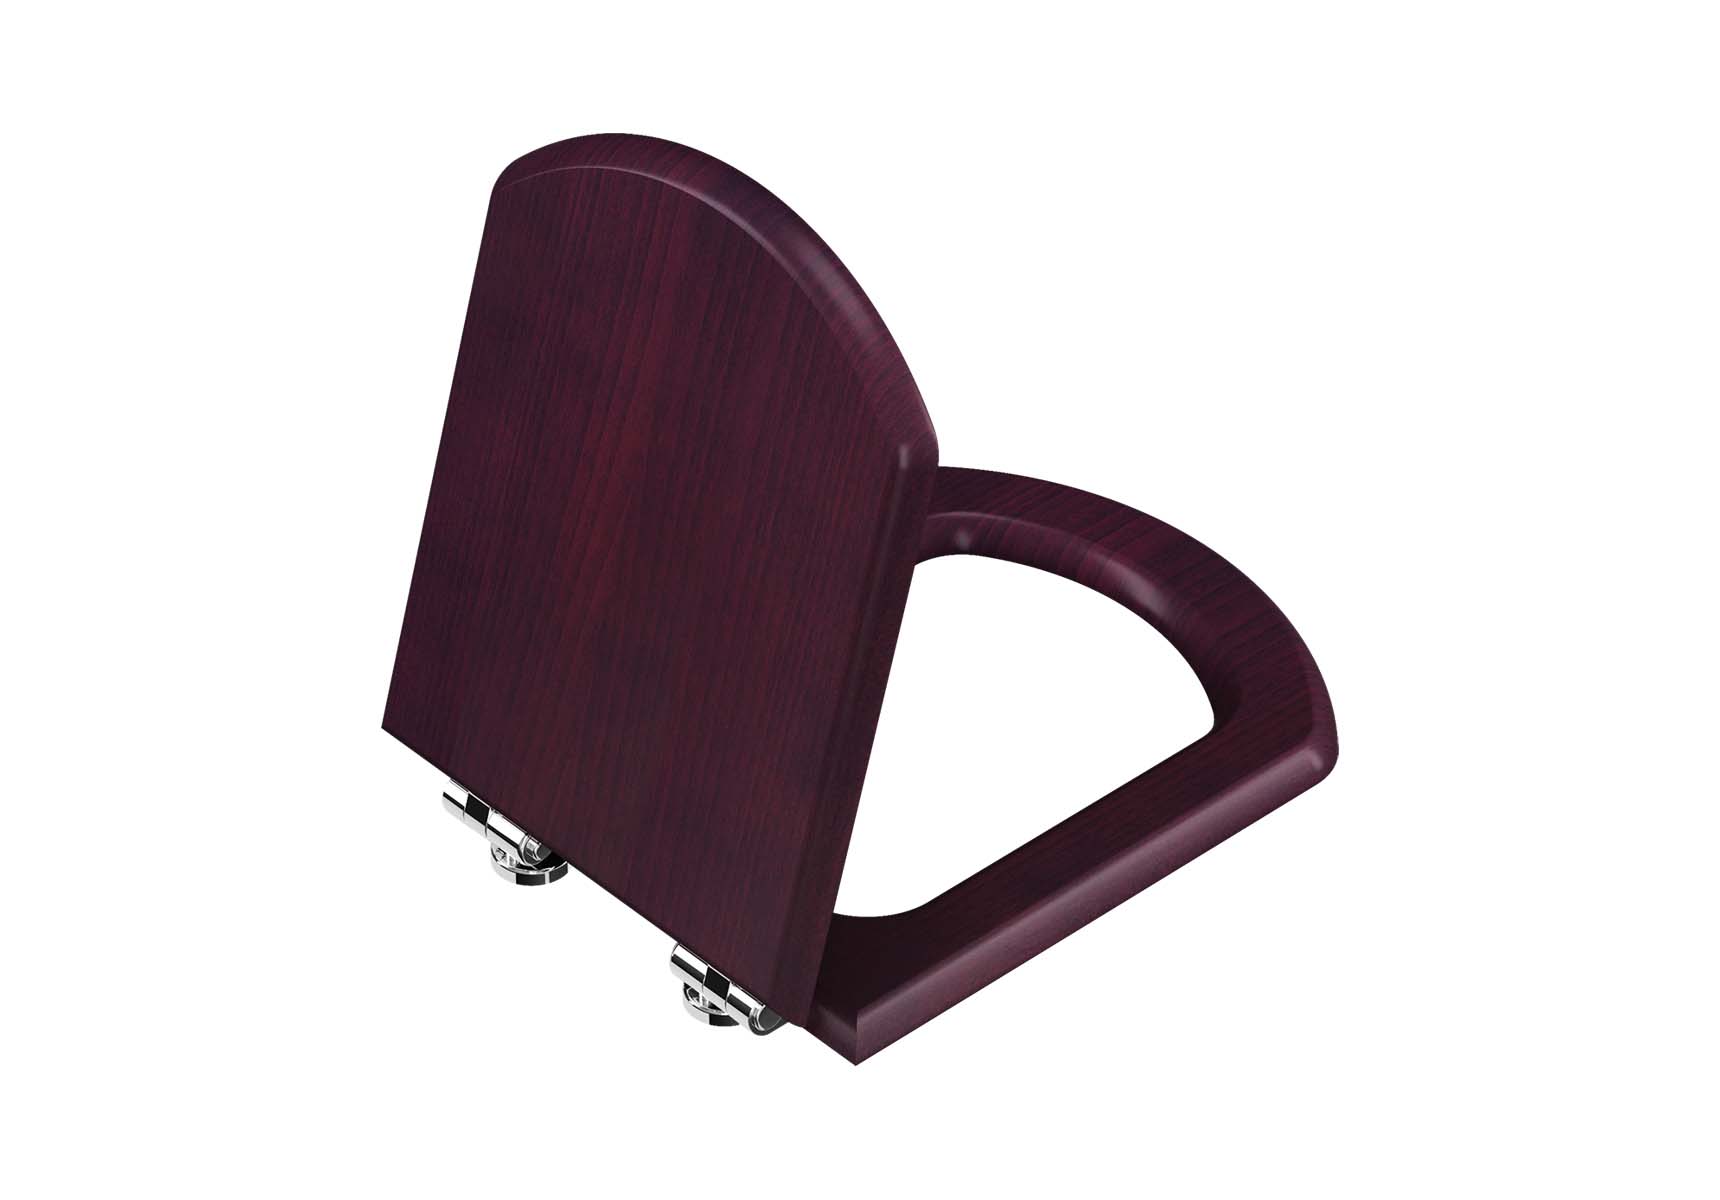 Wooden Seat, Soft Close, Detachable Metal Hinge, Top Fixing